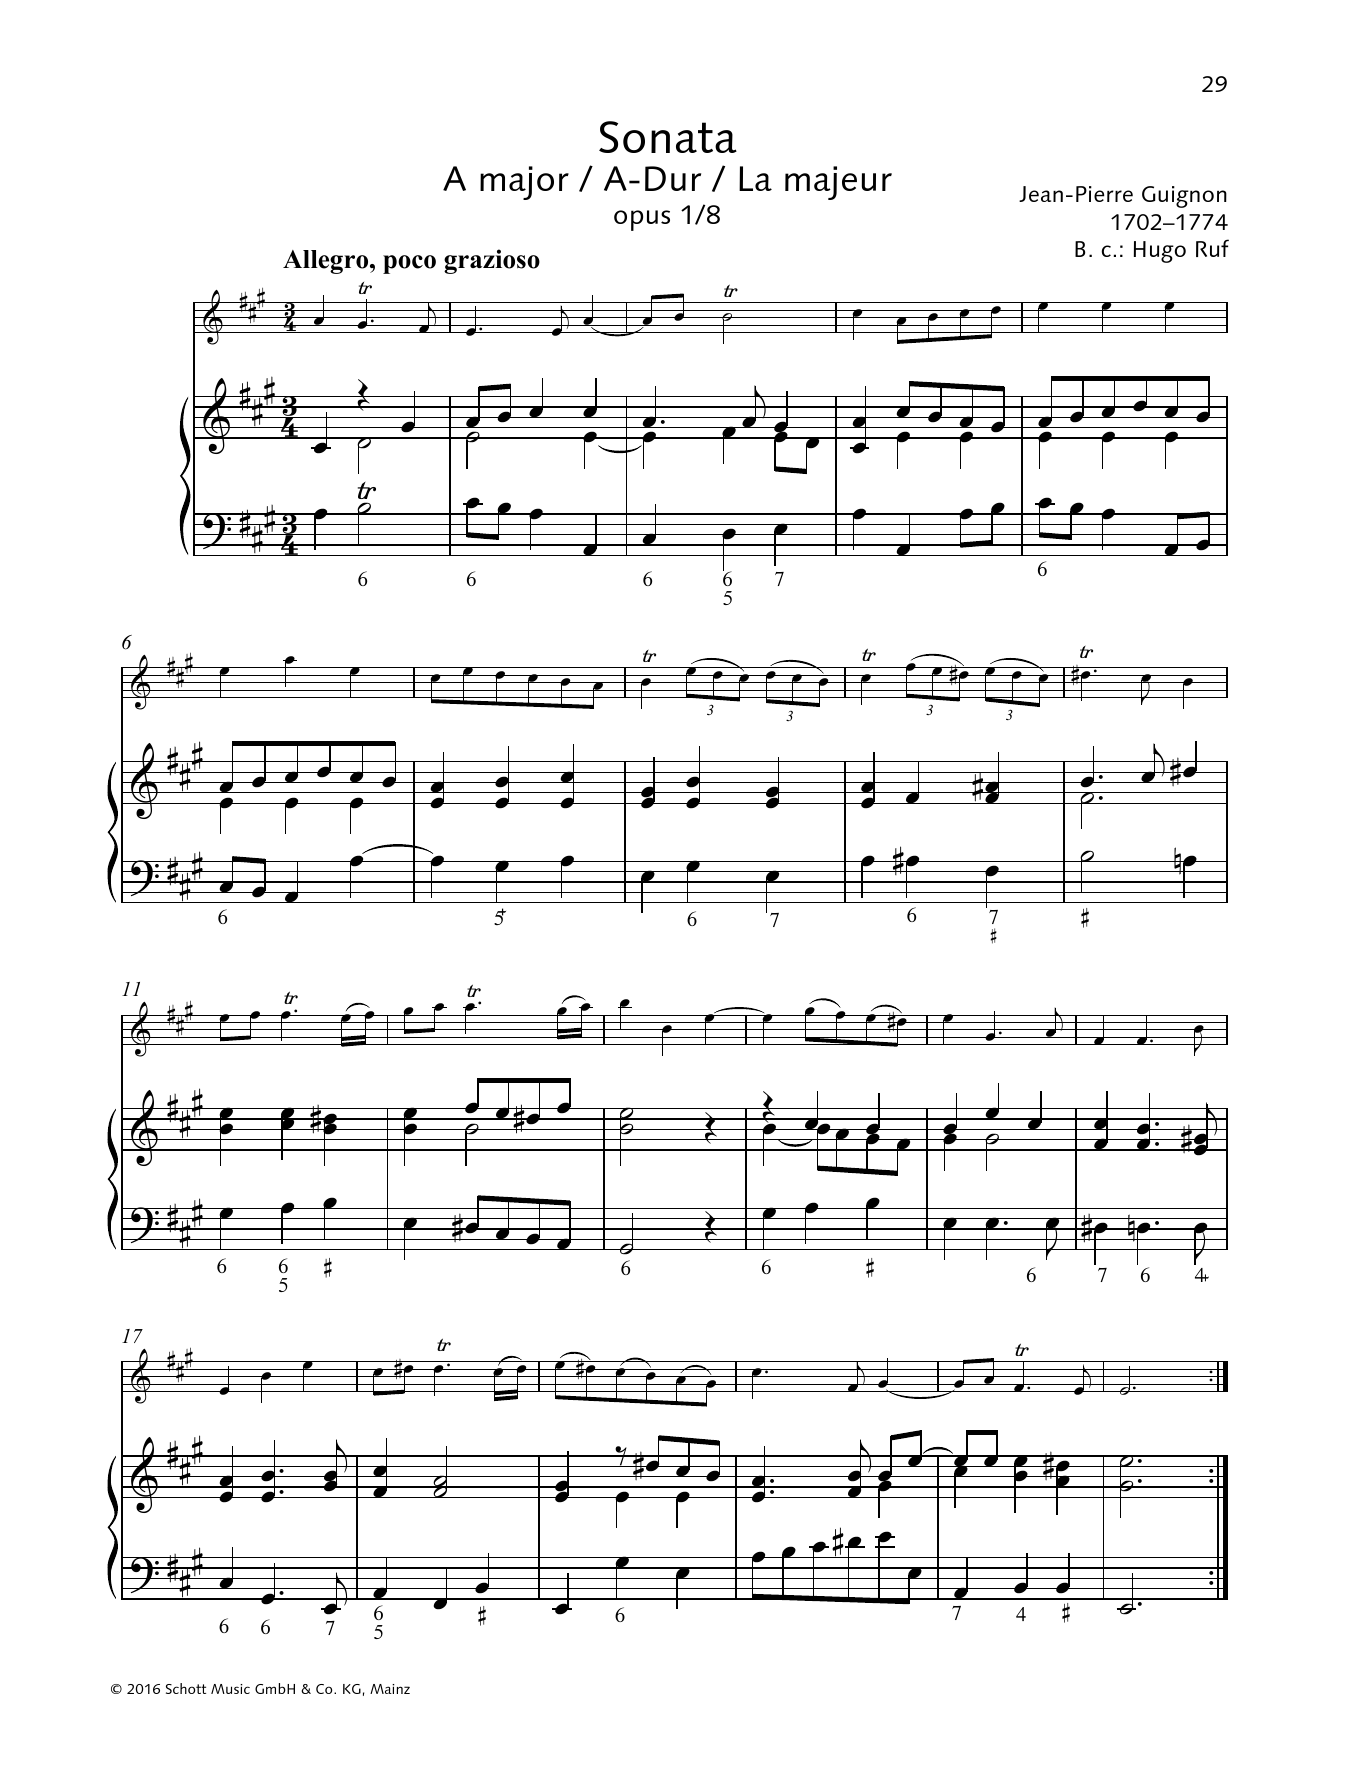 Sonata A Major sheet music